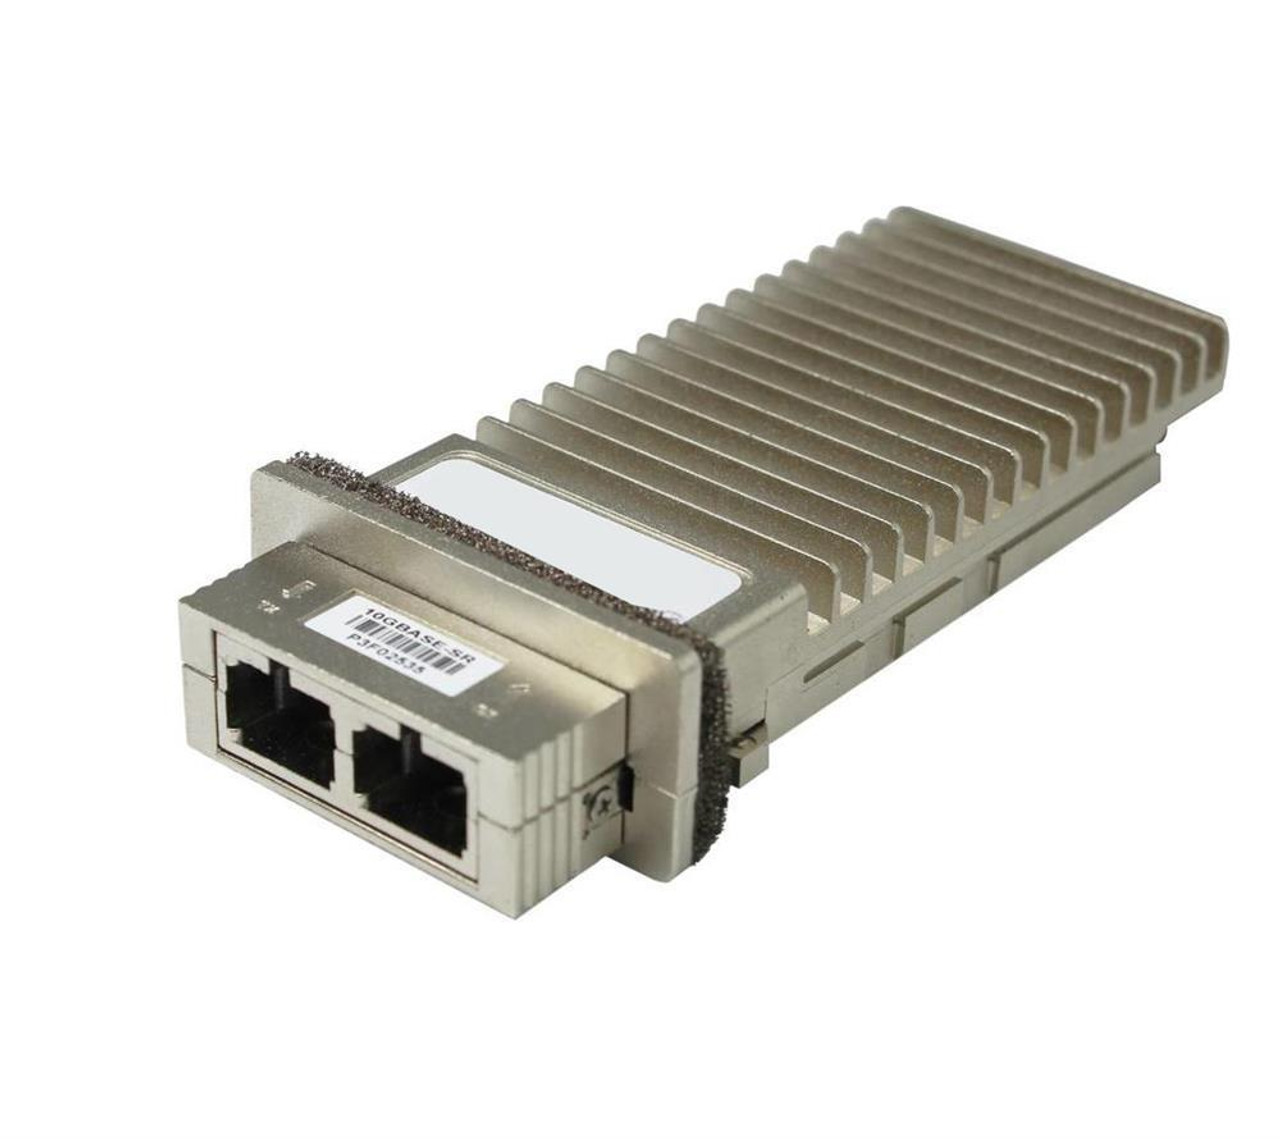 J8436A-ACCT Accortec 10Gbps 10GBase-SR Multi-mode Fiber 300m 850nm Duplex SC Connector X2 Transceiver Module for HP Compatible